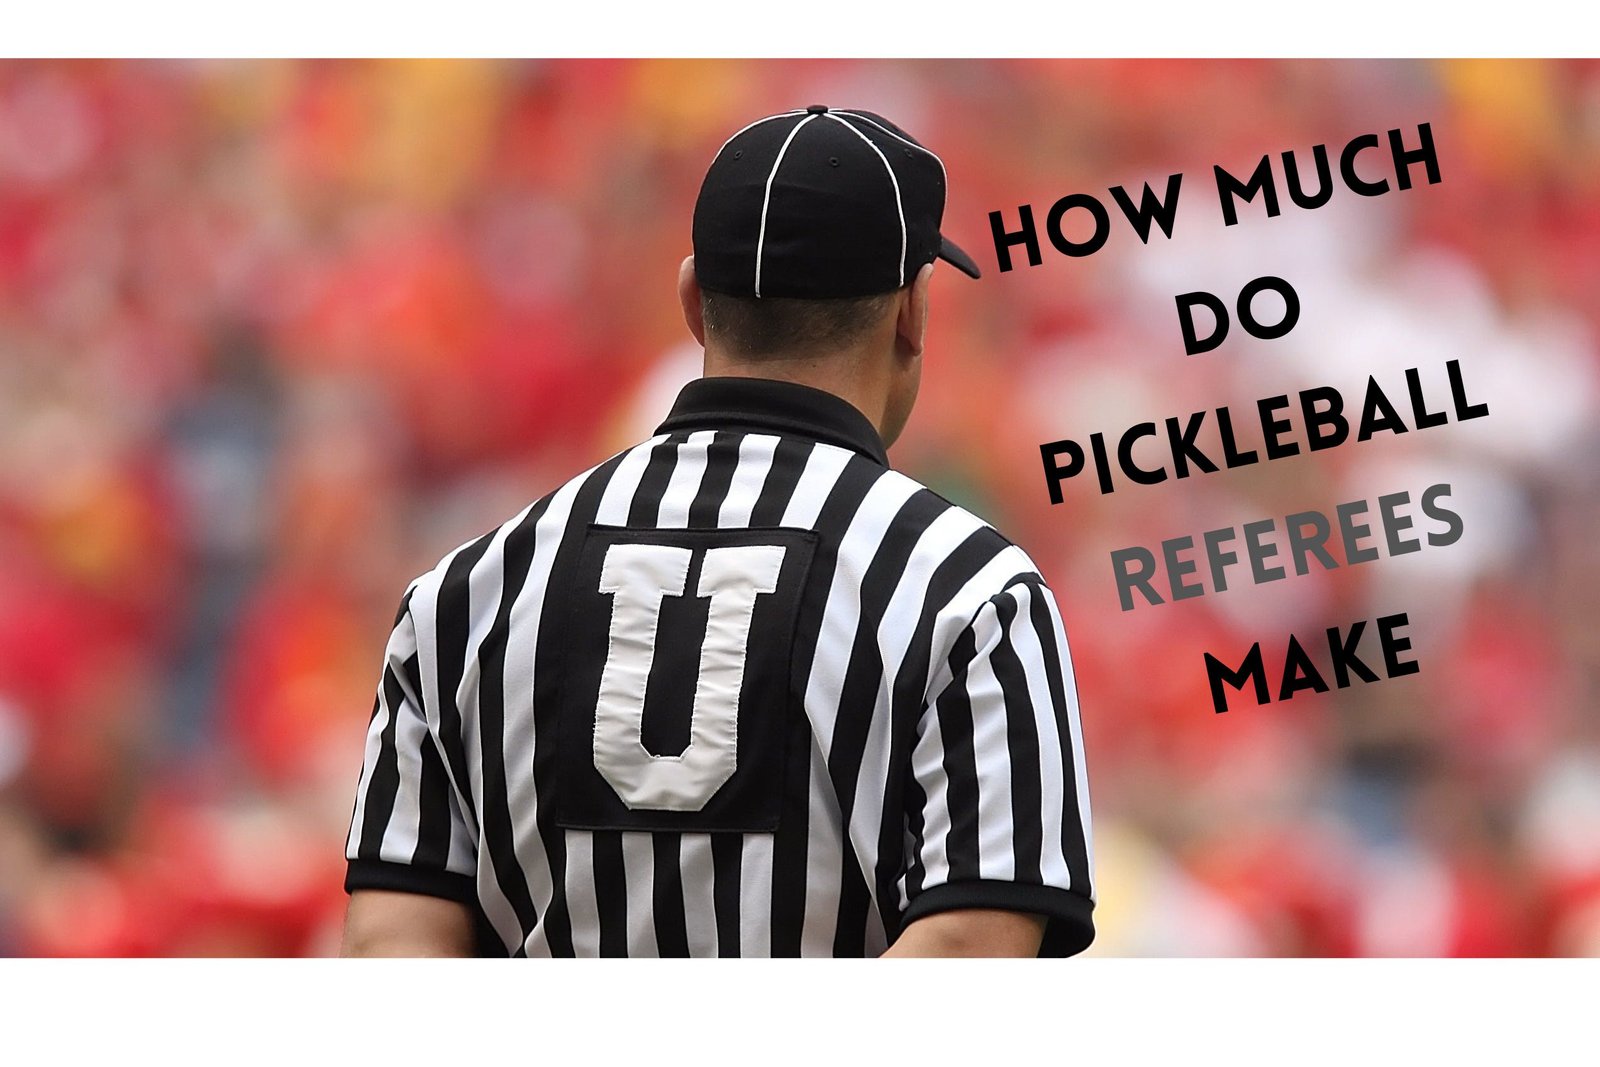 how much do pickleball referees make